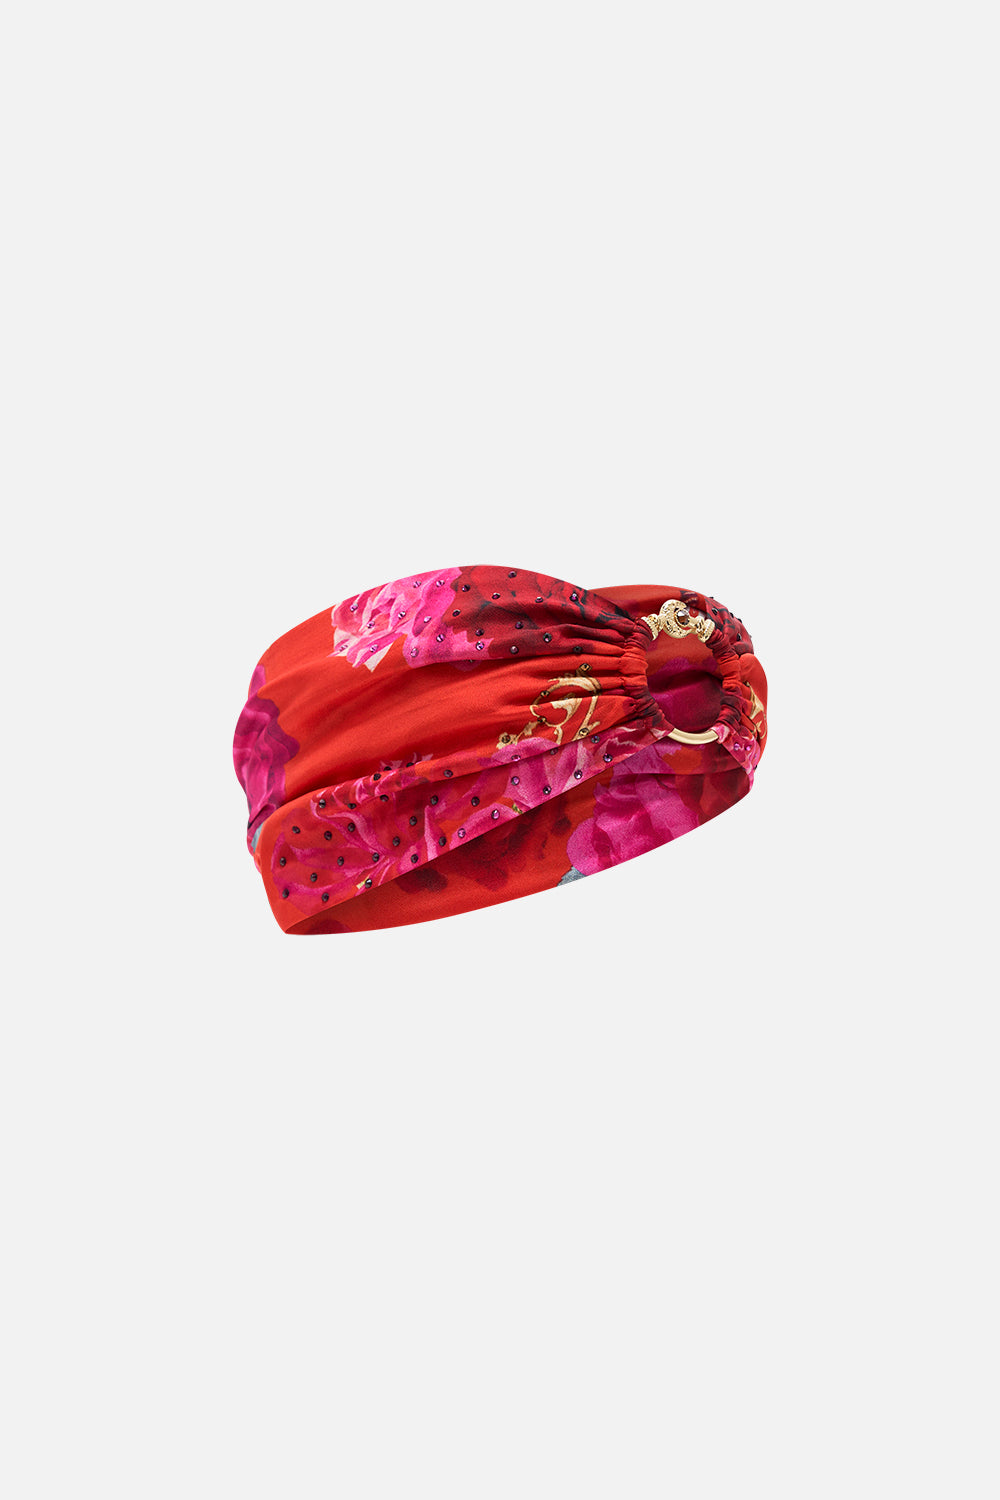 Product view of CAMILLA ring headband in An Italian Rosa print